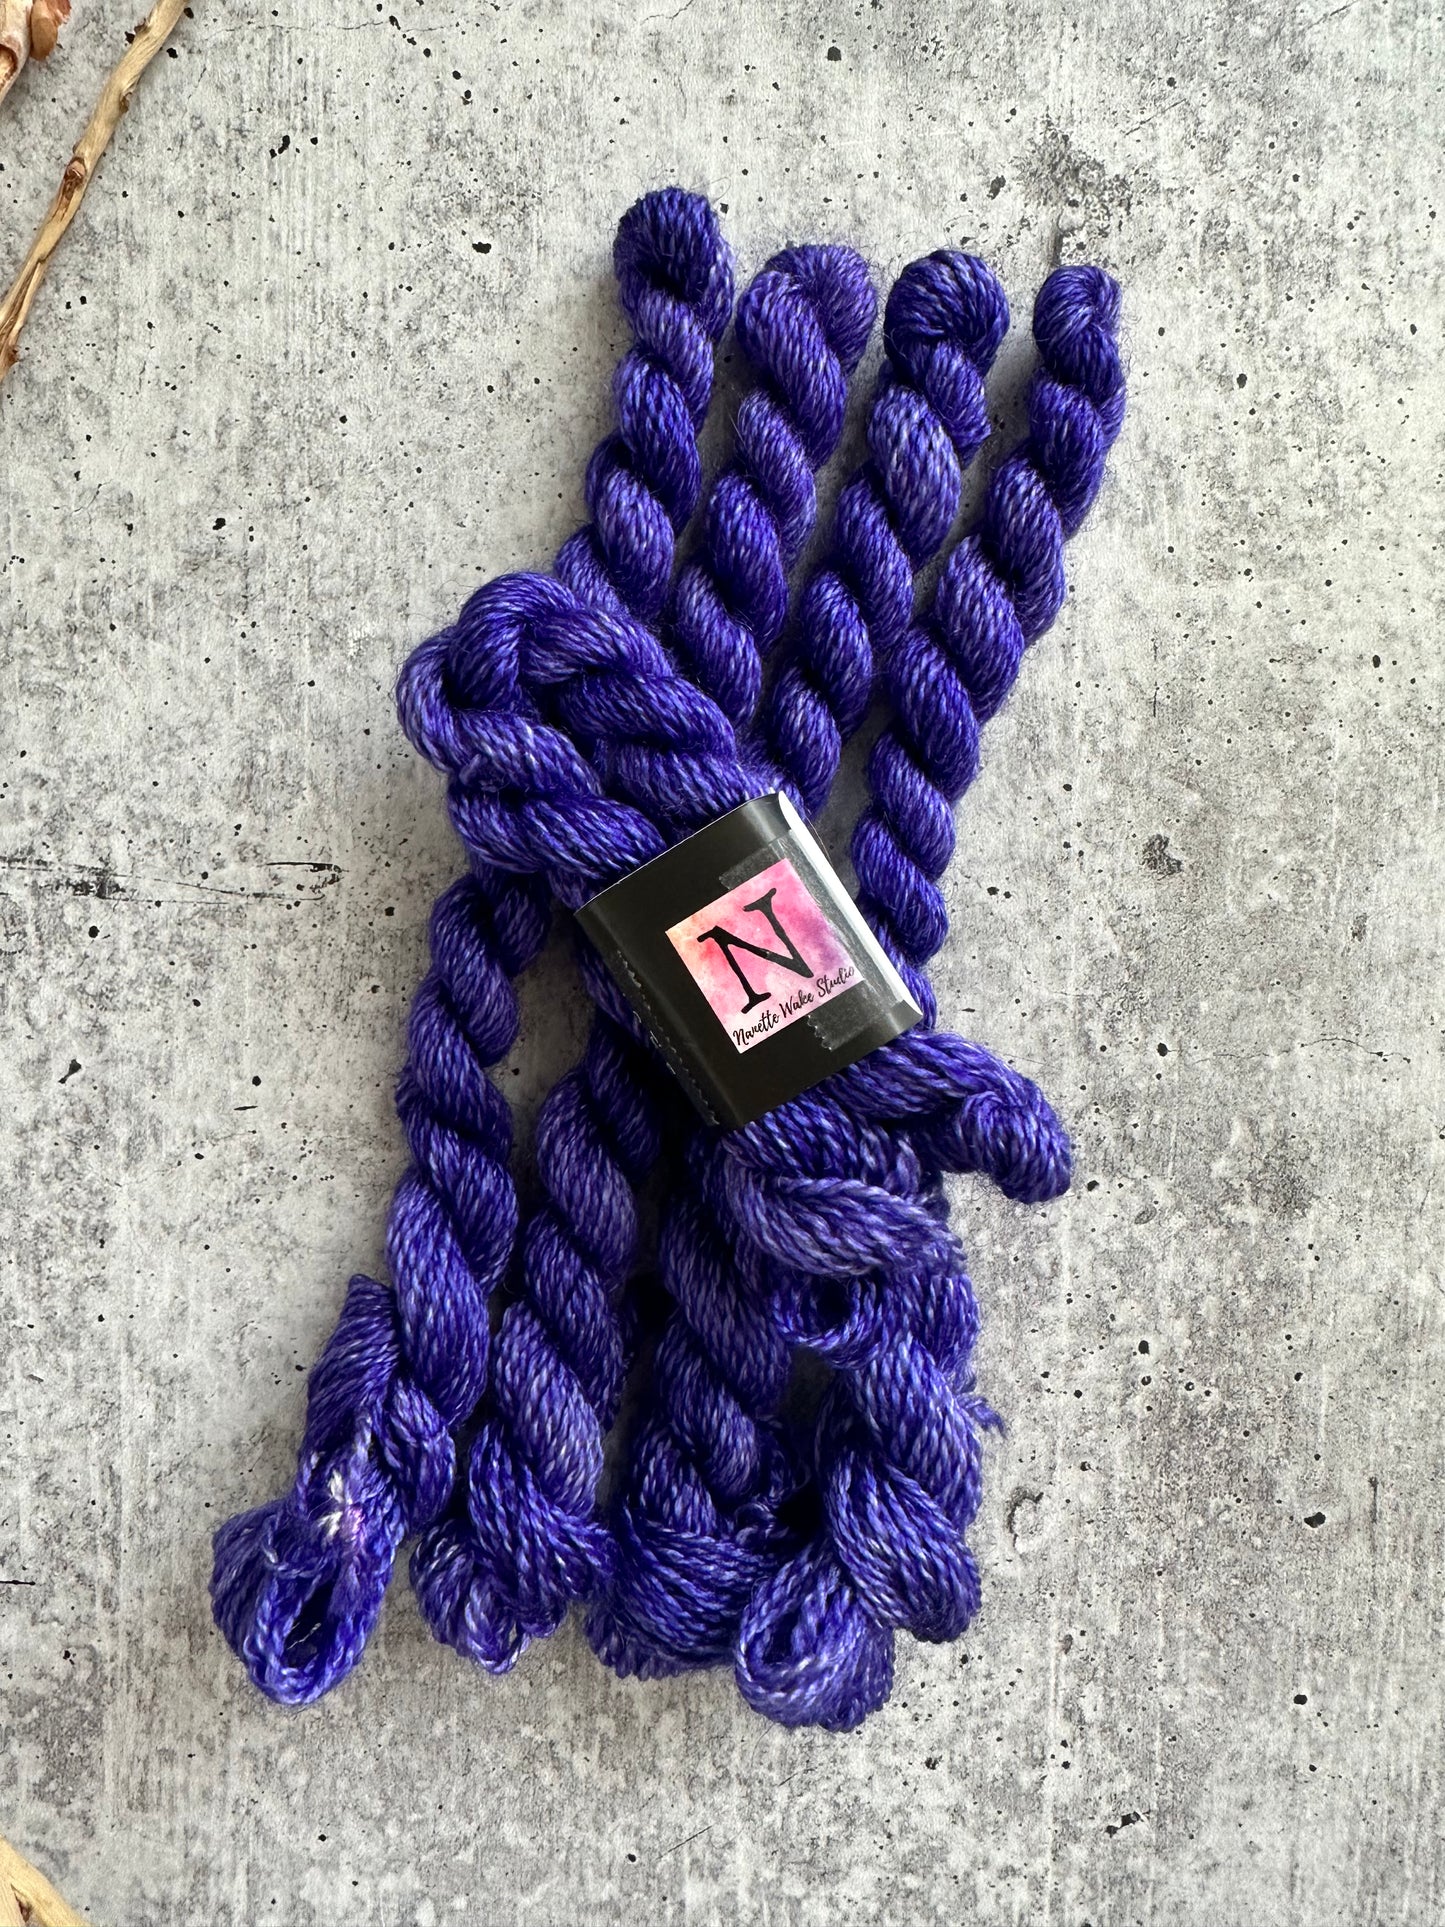 Purple Embroidery Thread